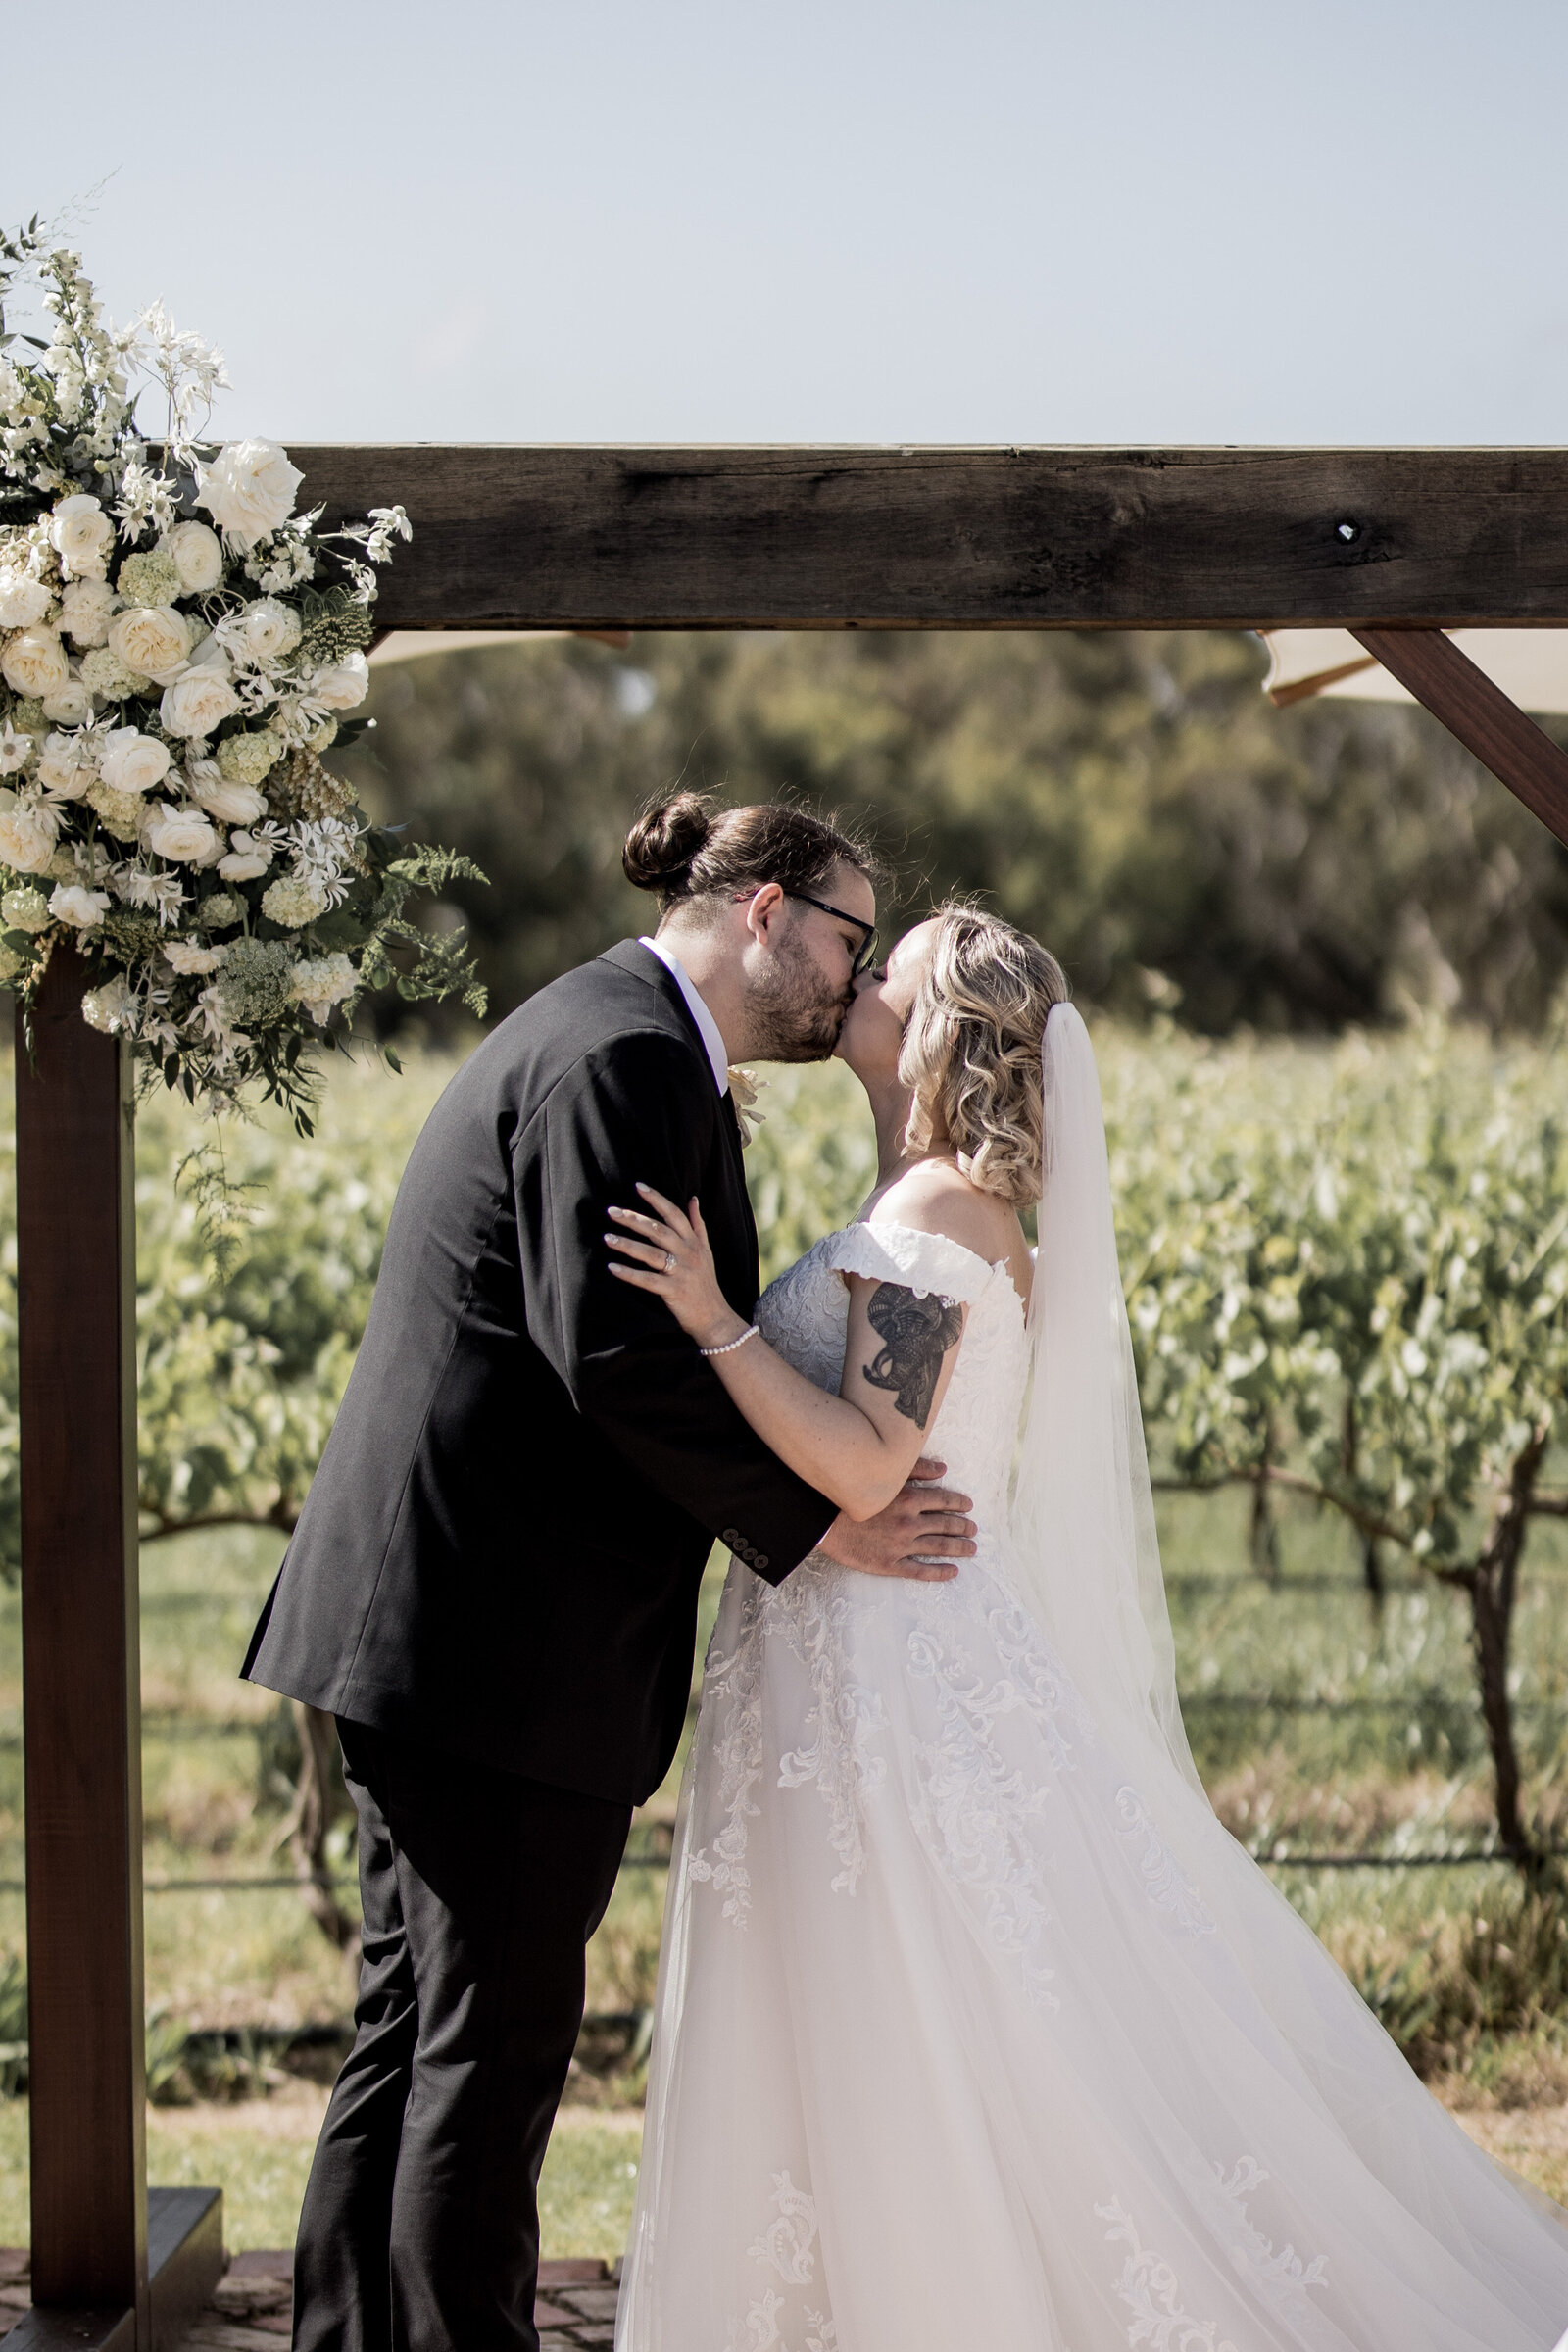 Maxine-Chris-Rexvil-Photography-Adelaide-Wedding-Photographer-331